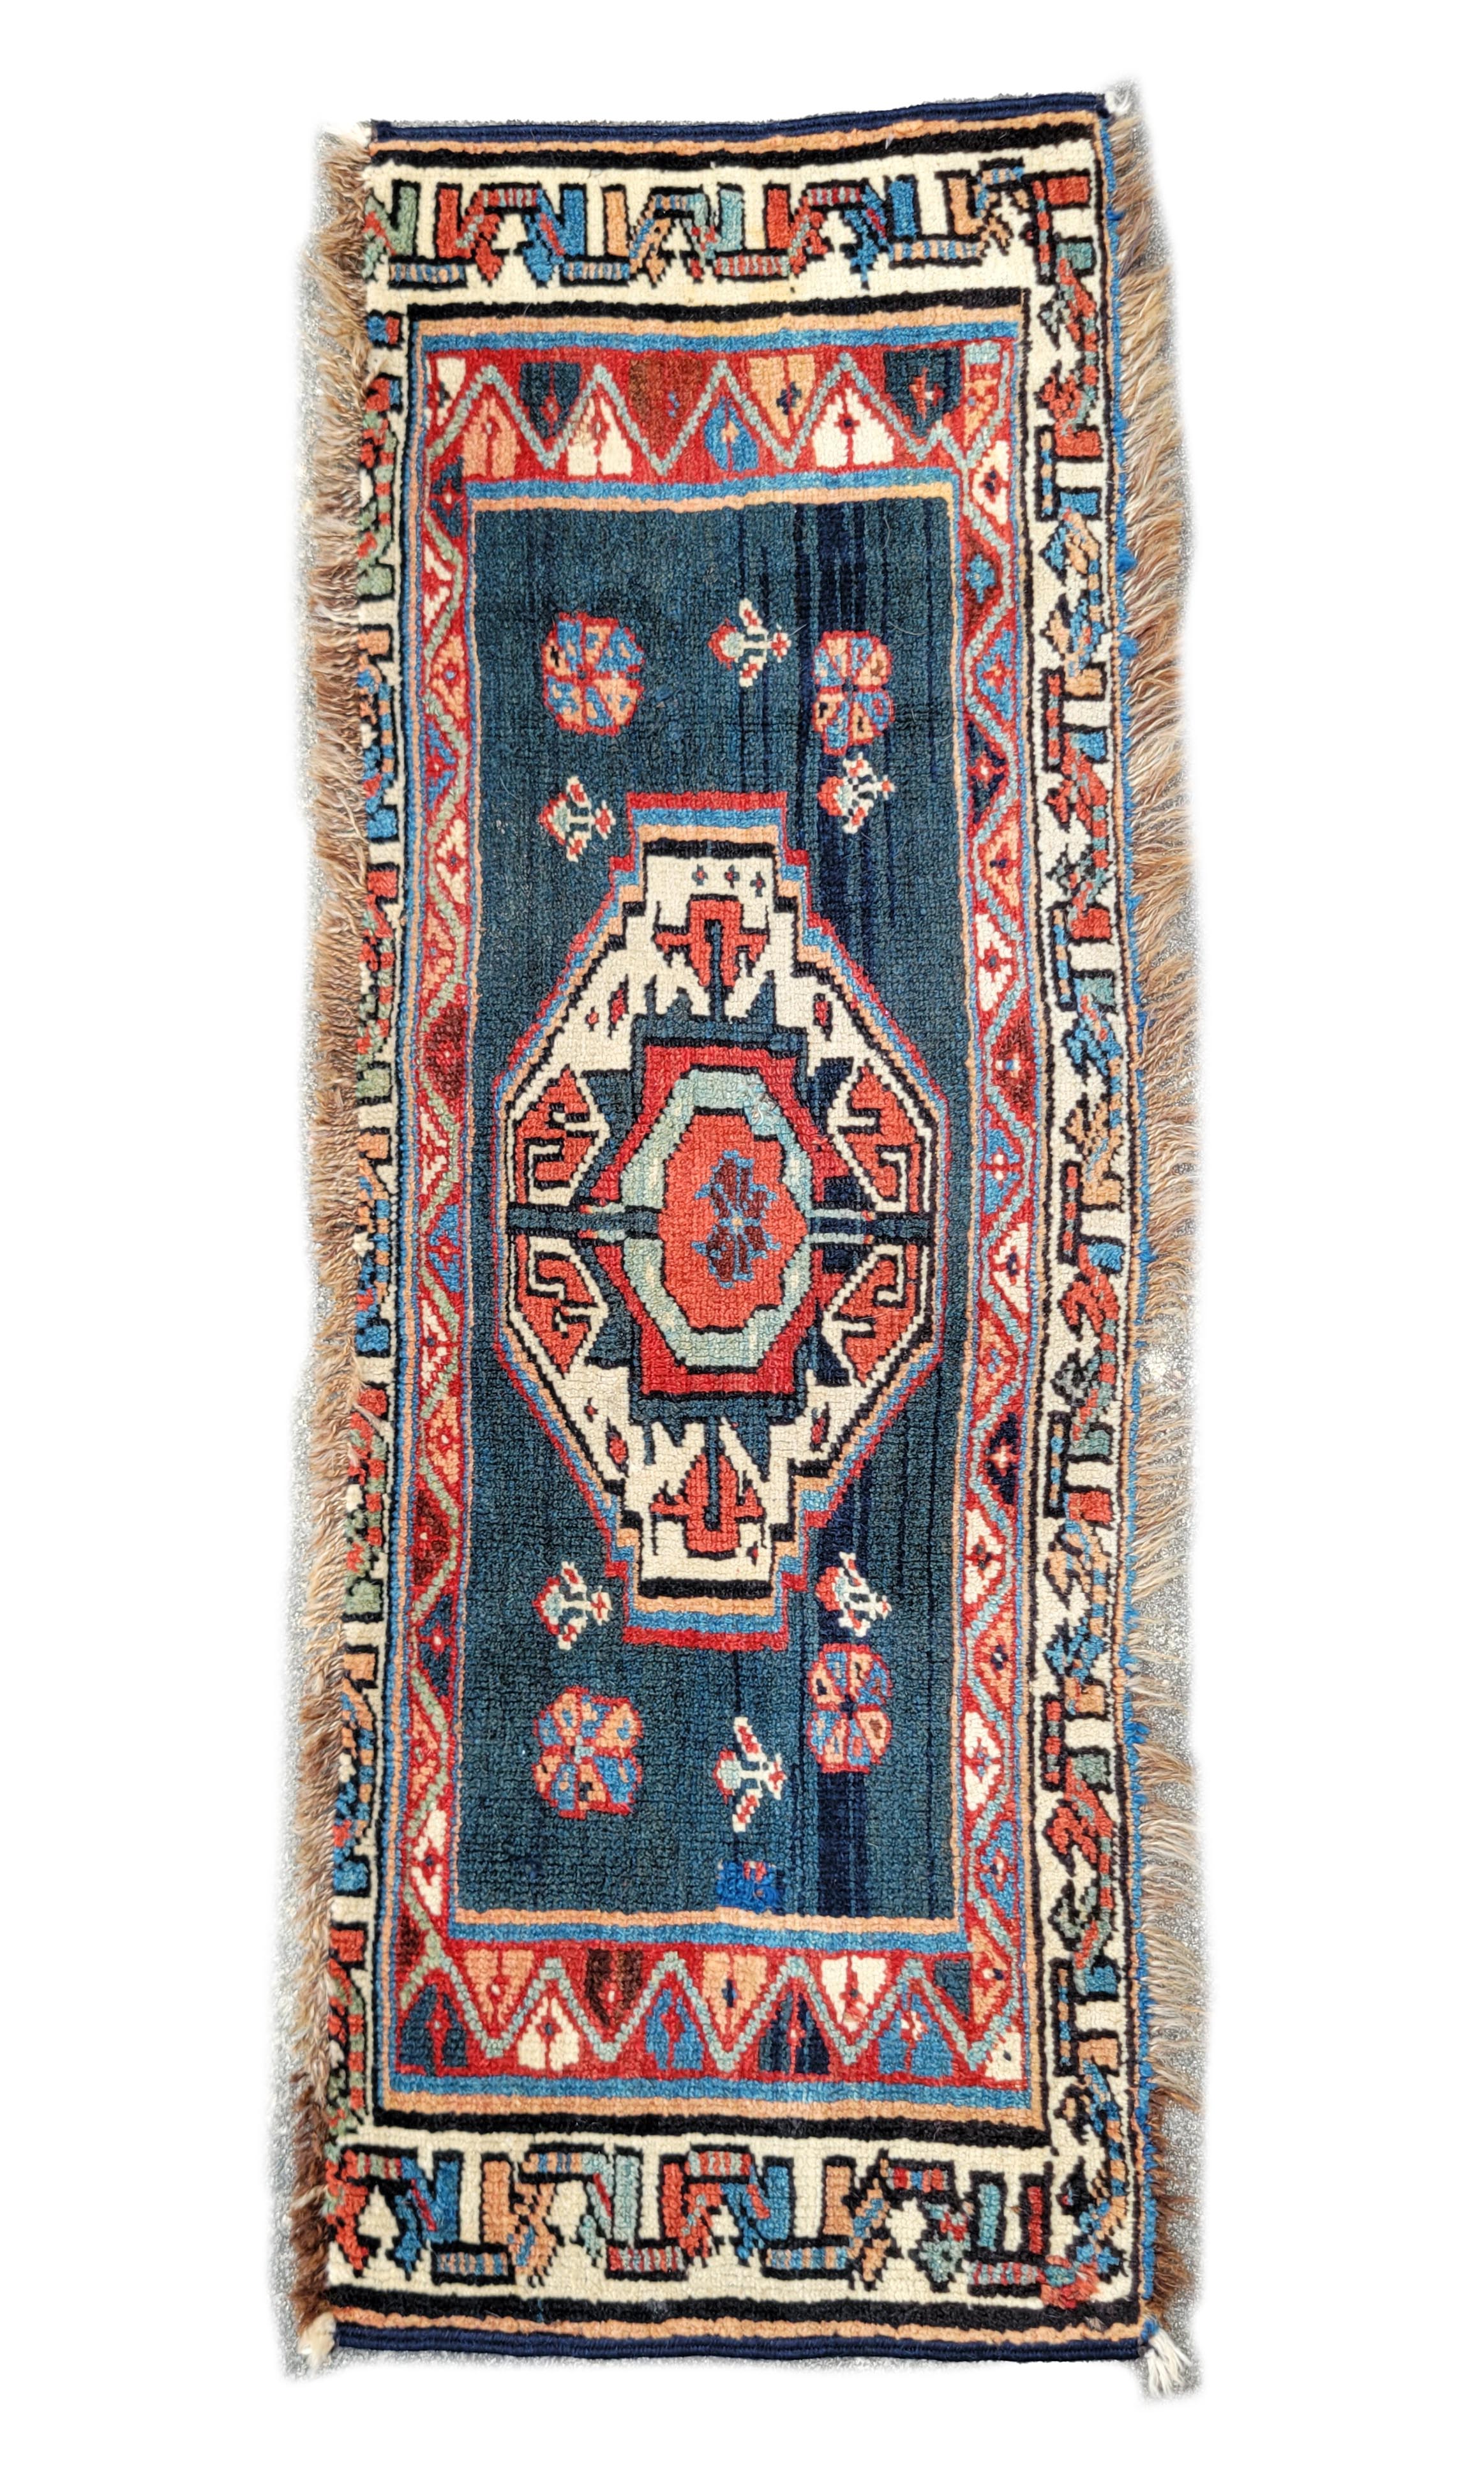 Three Antique Persian Tribal Mafrash Bag Face Rugs